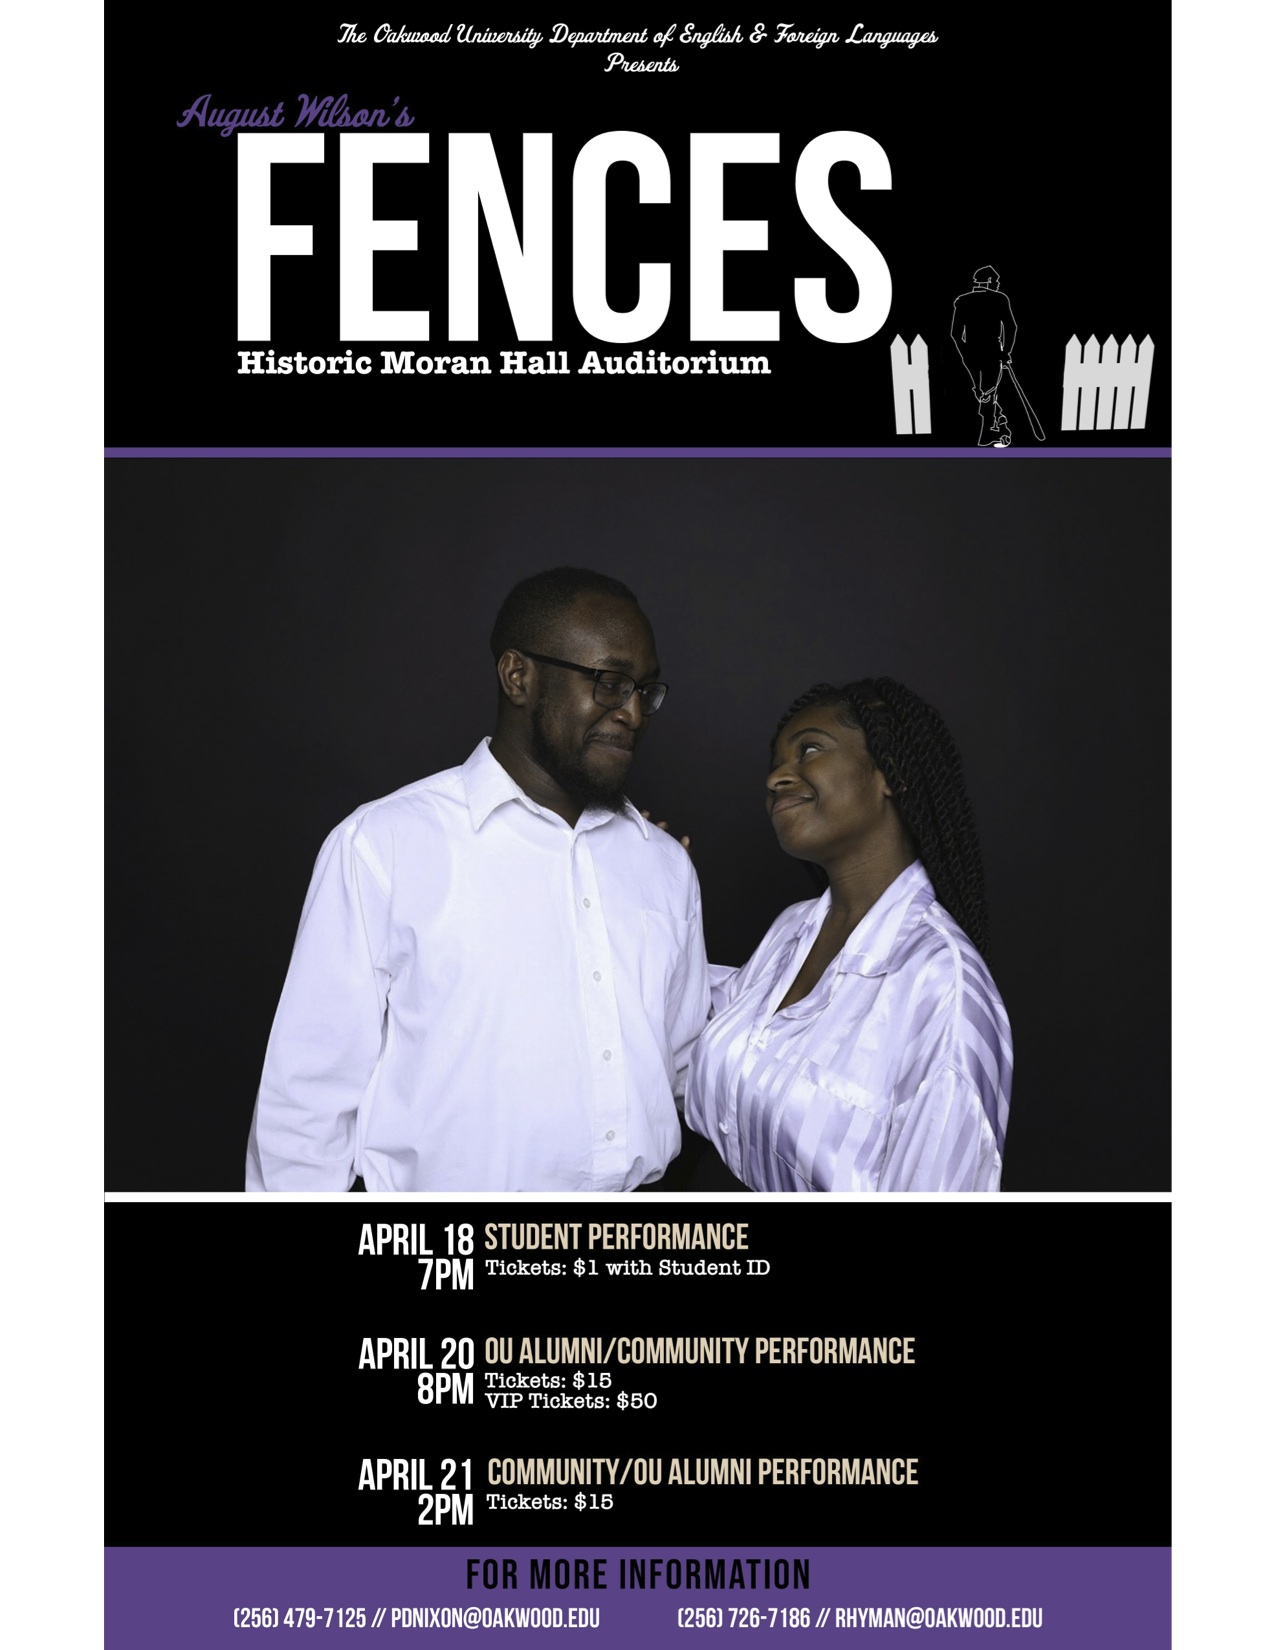 Oakwood University presents August Wilson's "Fences"